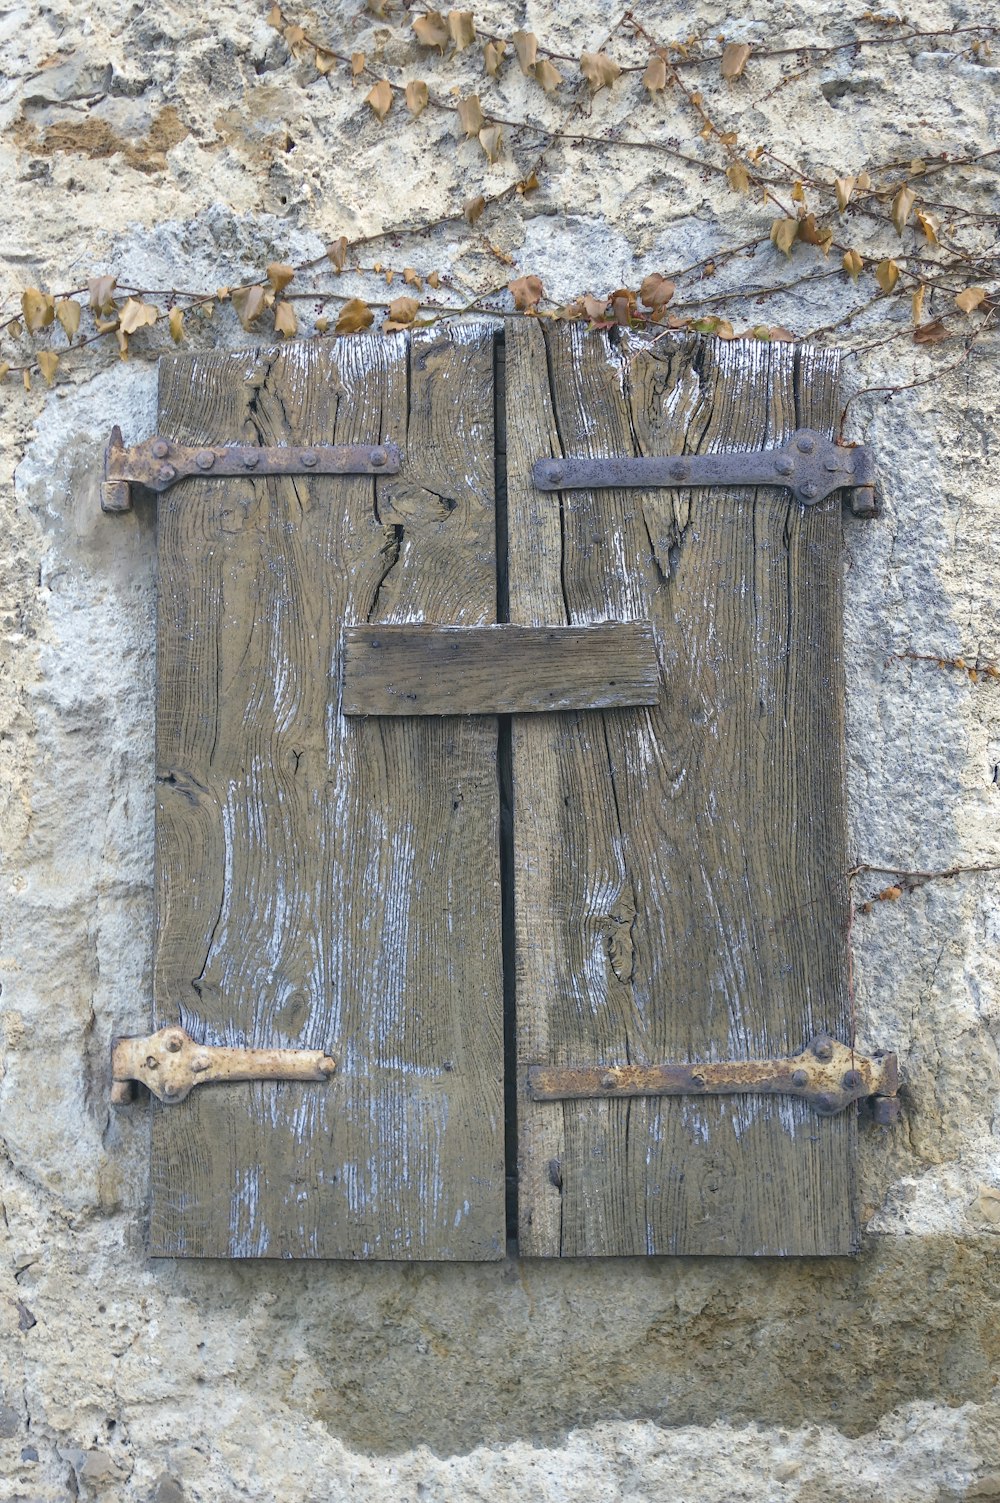 a wooden door with a handle